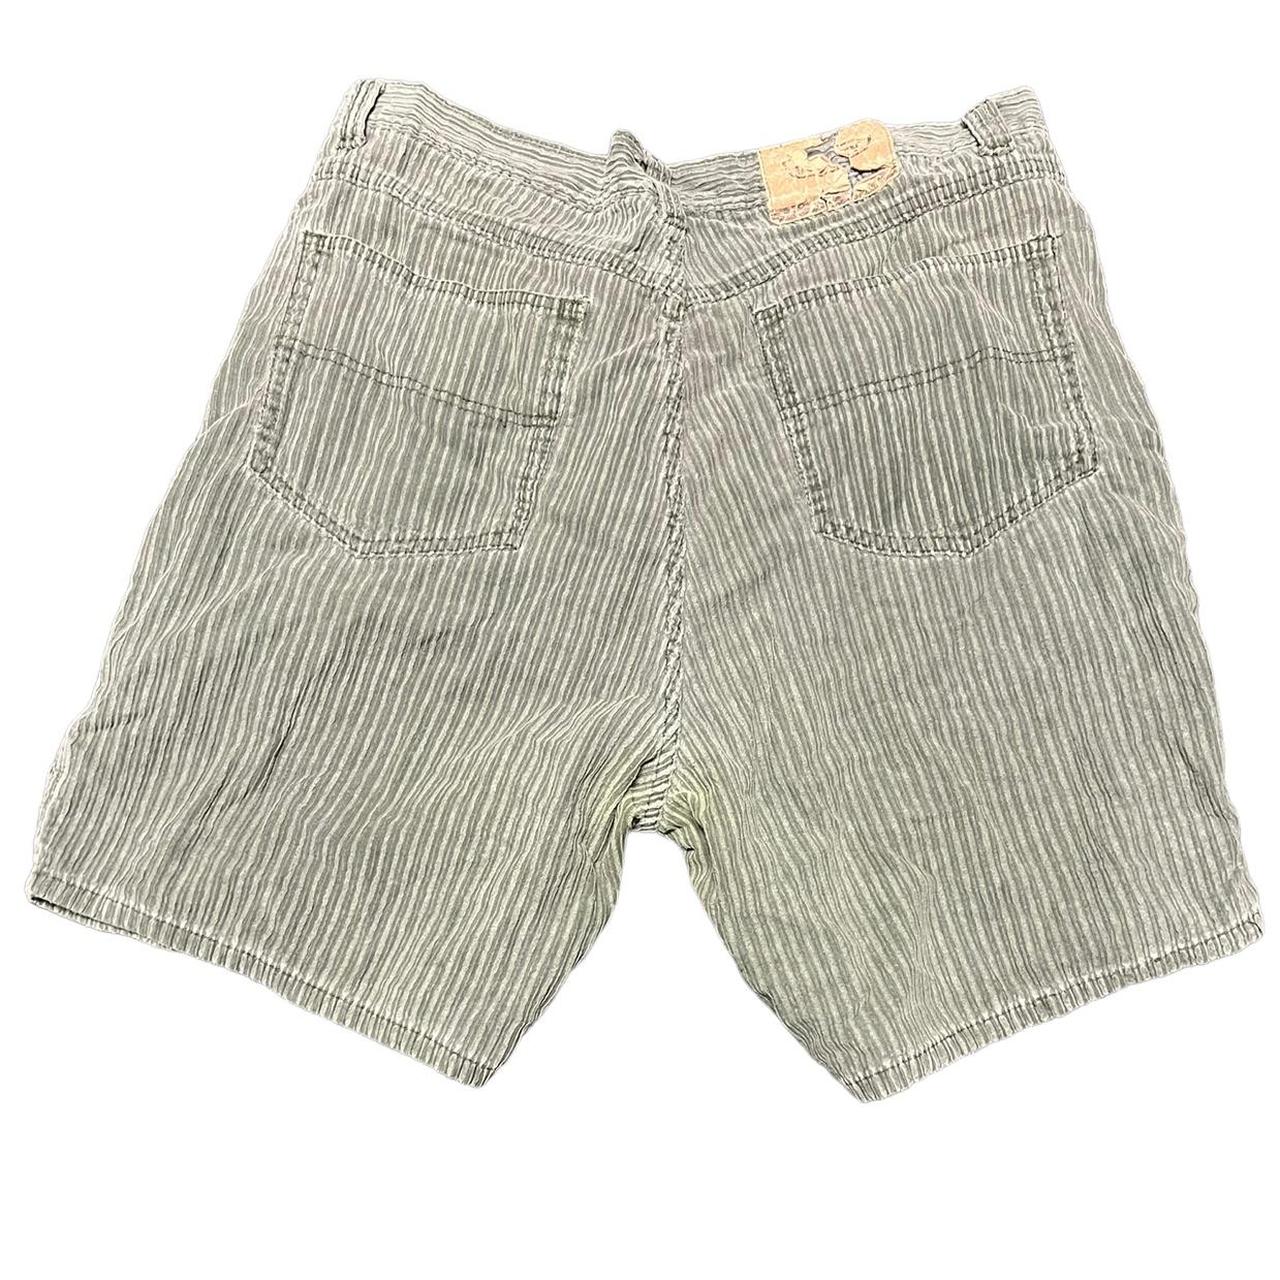 Utility Men's Khaki and Green Shorts (2)